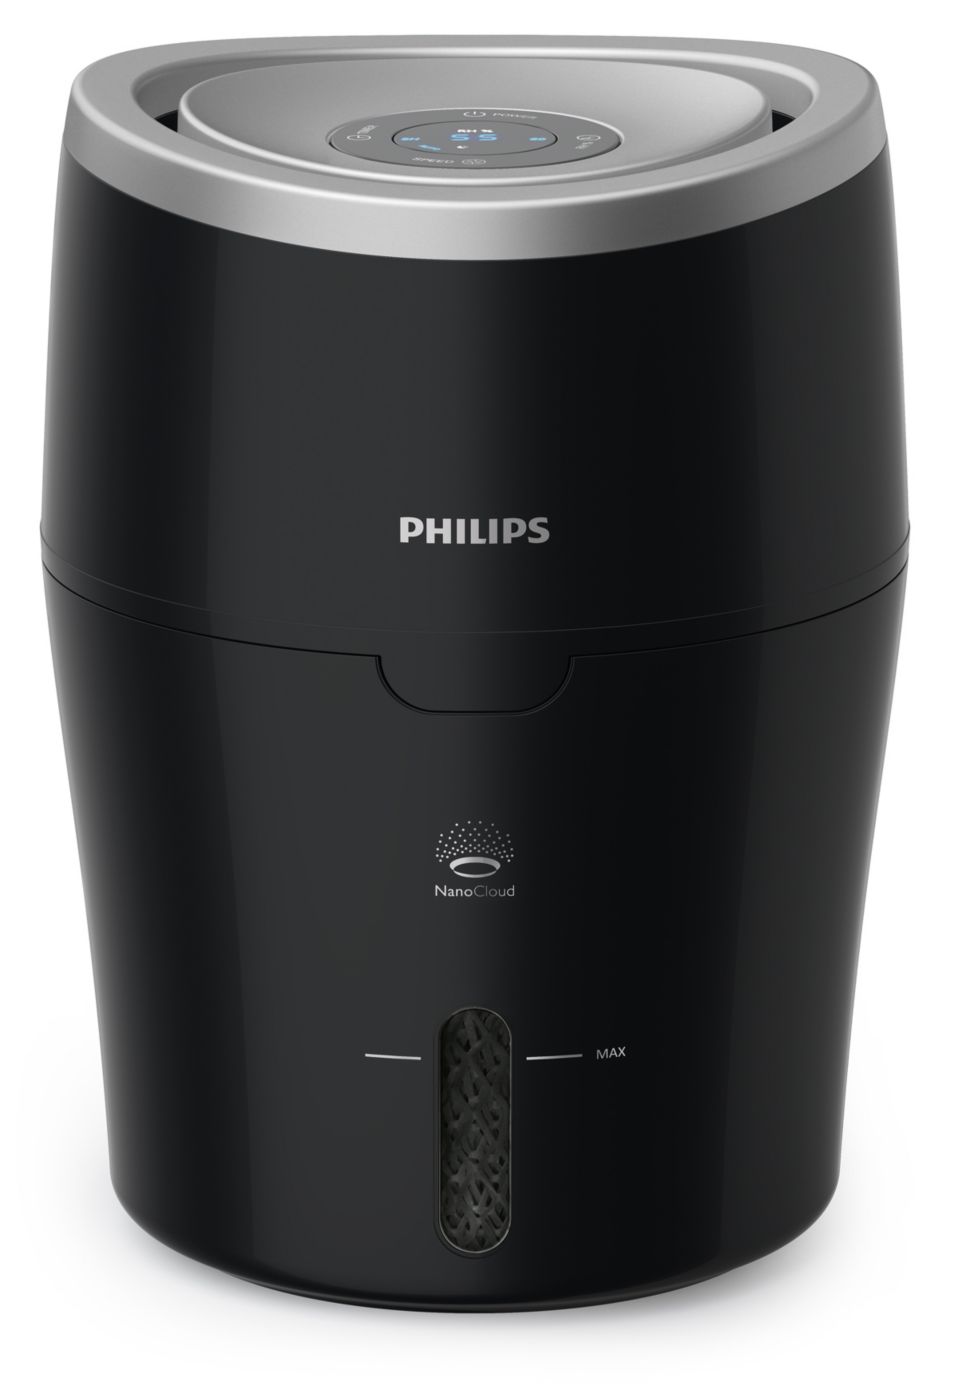 ② Humidificateur d'air Philips HU4813 — Équipement de traitement